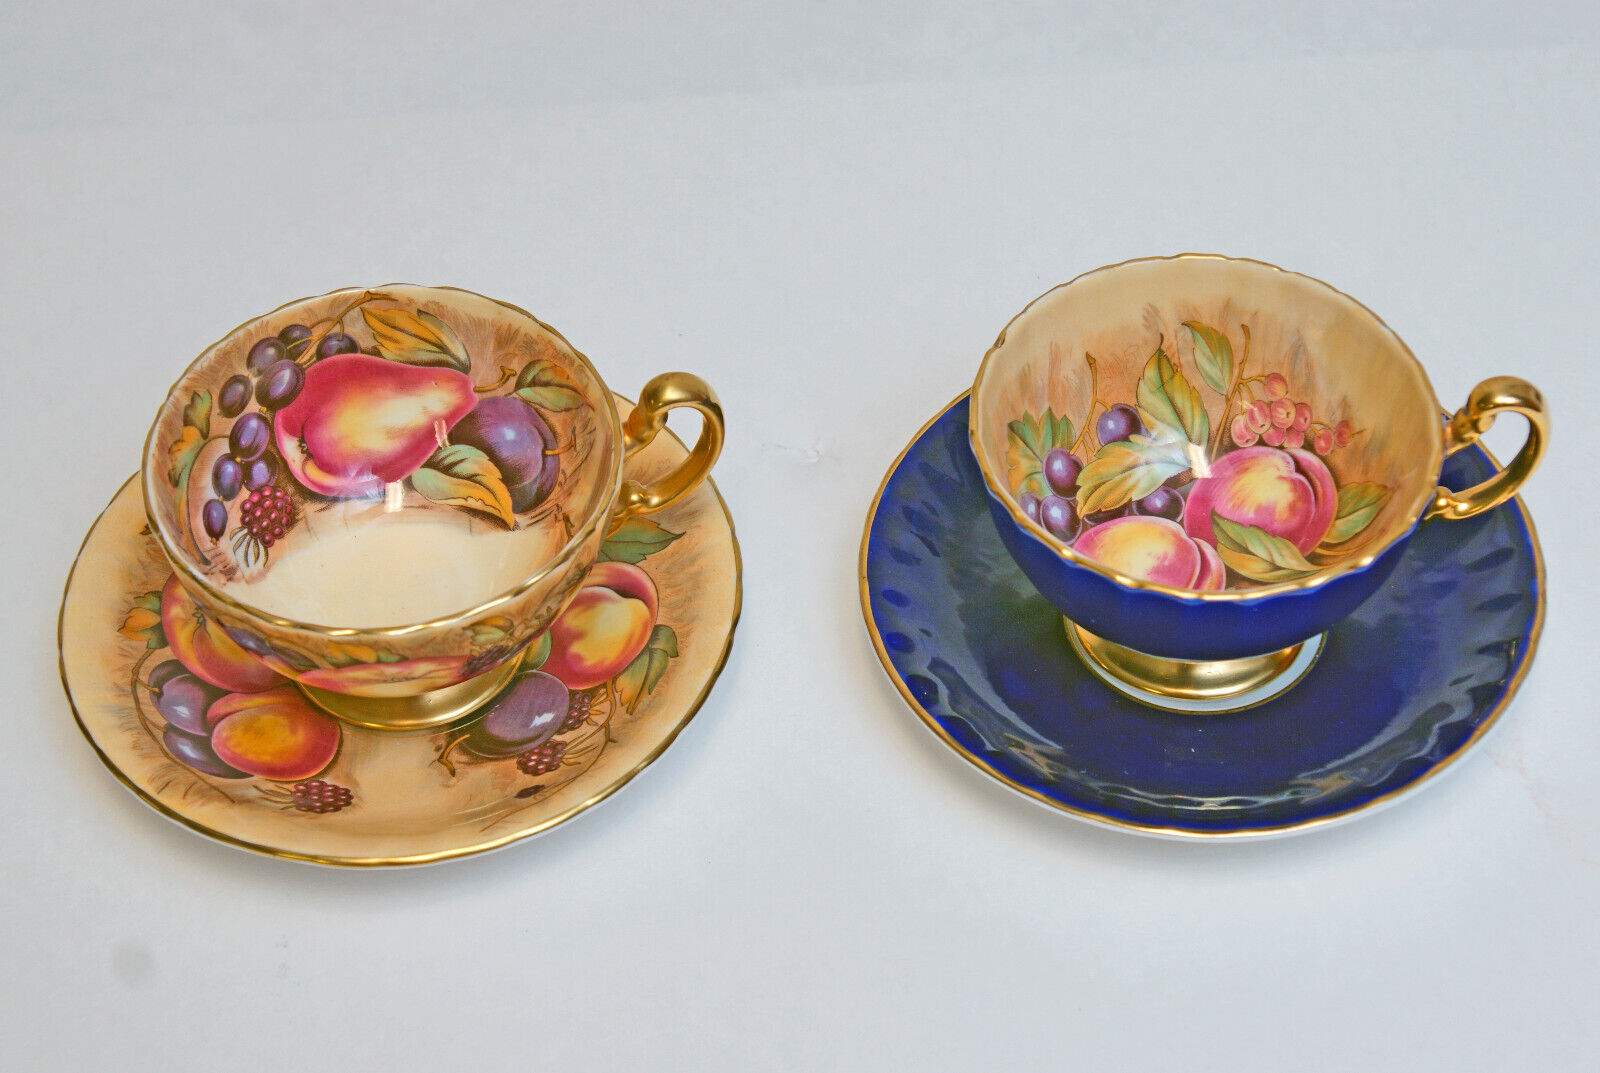 2 New Rare Vintage Aynsley Tea Cup Saucer Sets Signed by N.Brunt and D.Jones